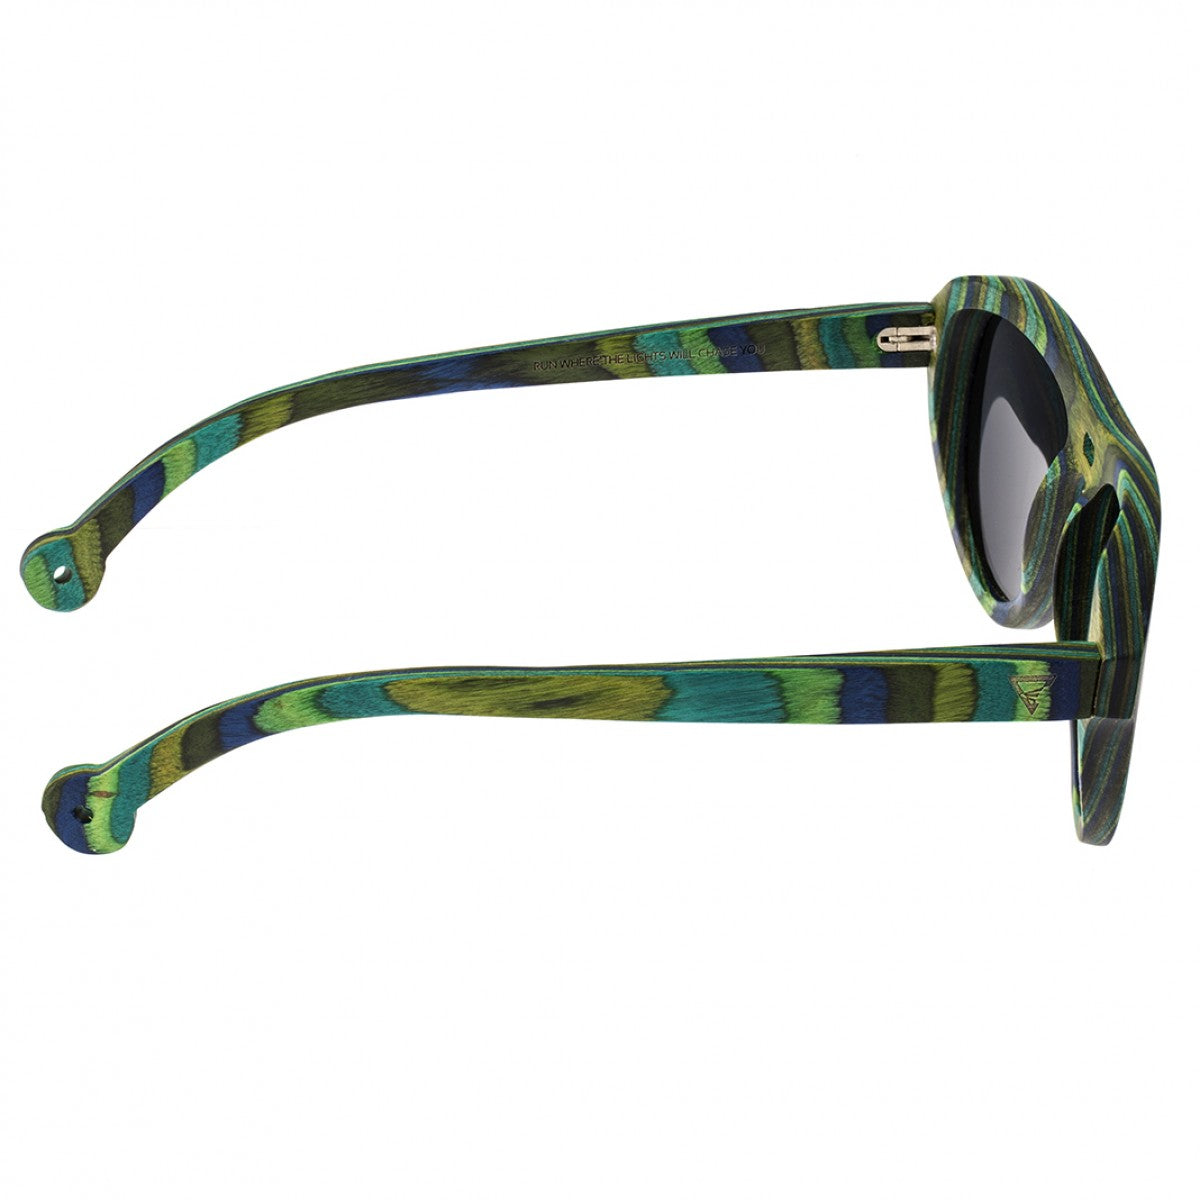 Spectrum Lopez Wood Polarized Sunglasses - Green Stripe/Black - SSGS111BK